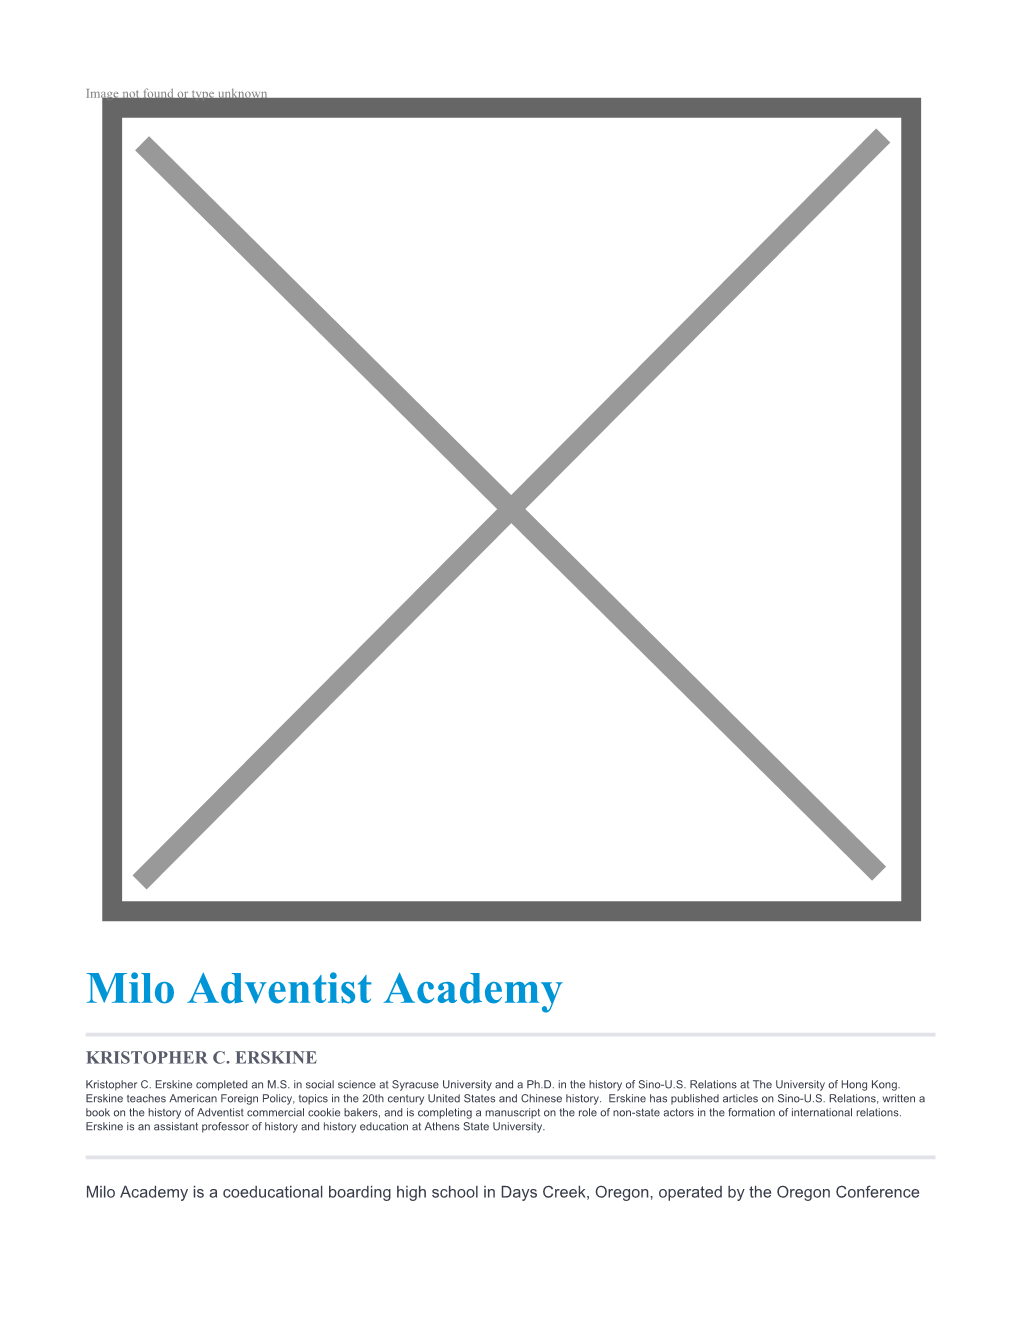 Milo Adventist Academy